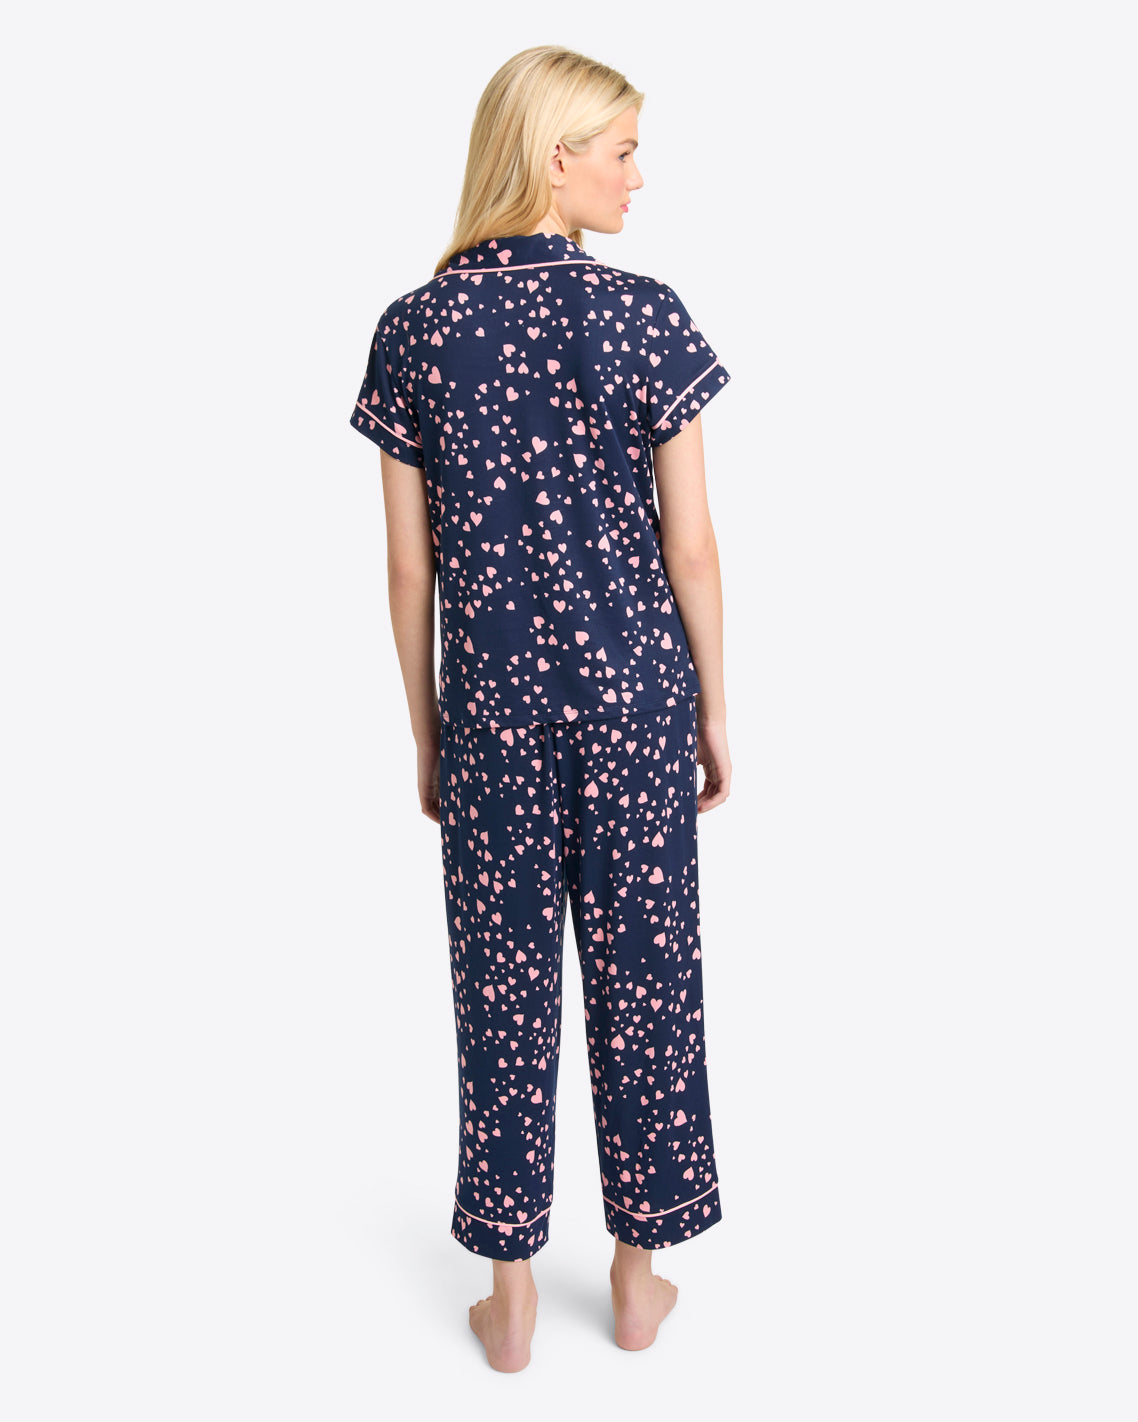 Linda Short Sleeve Pajama Set in Navy Hearts